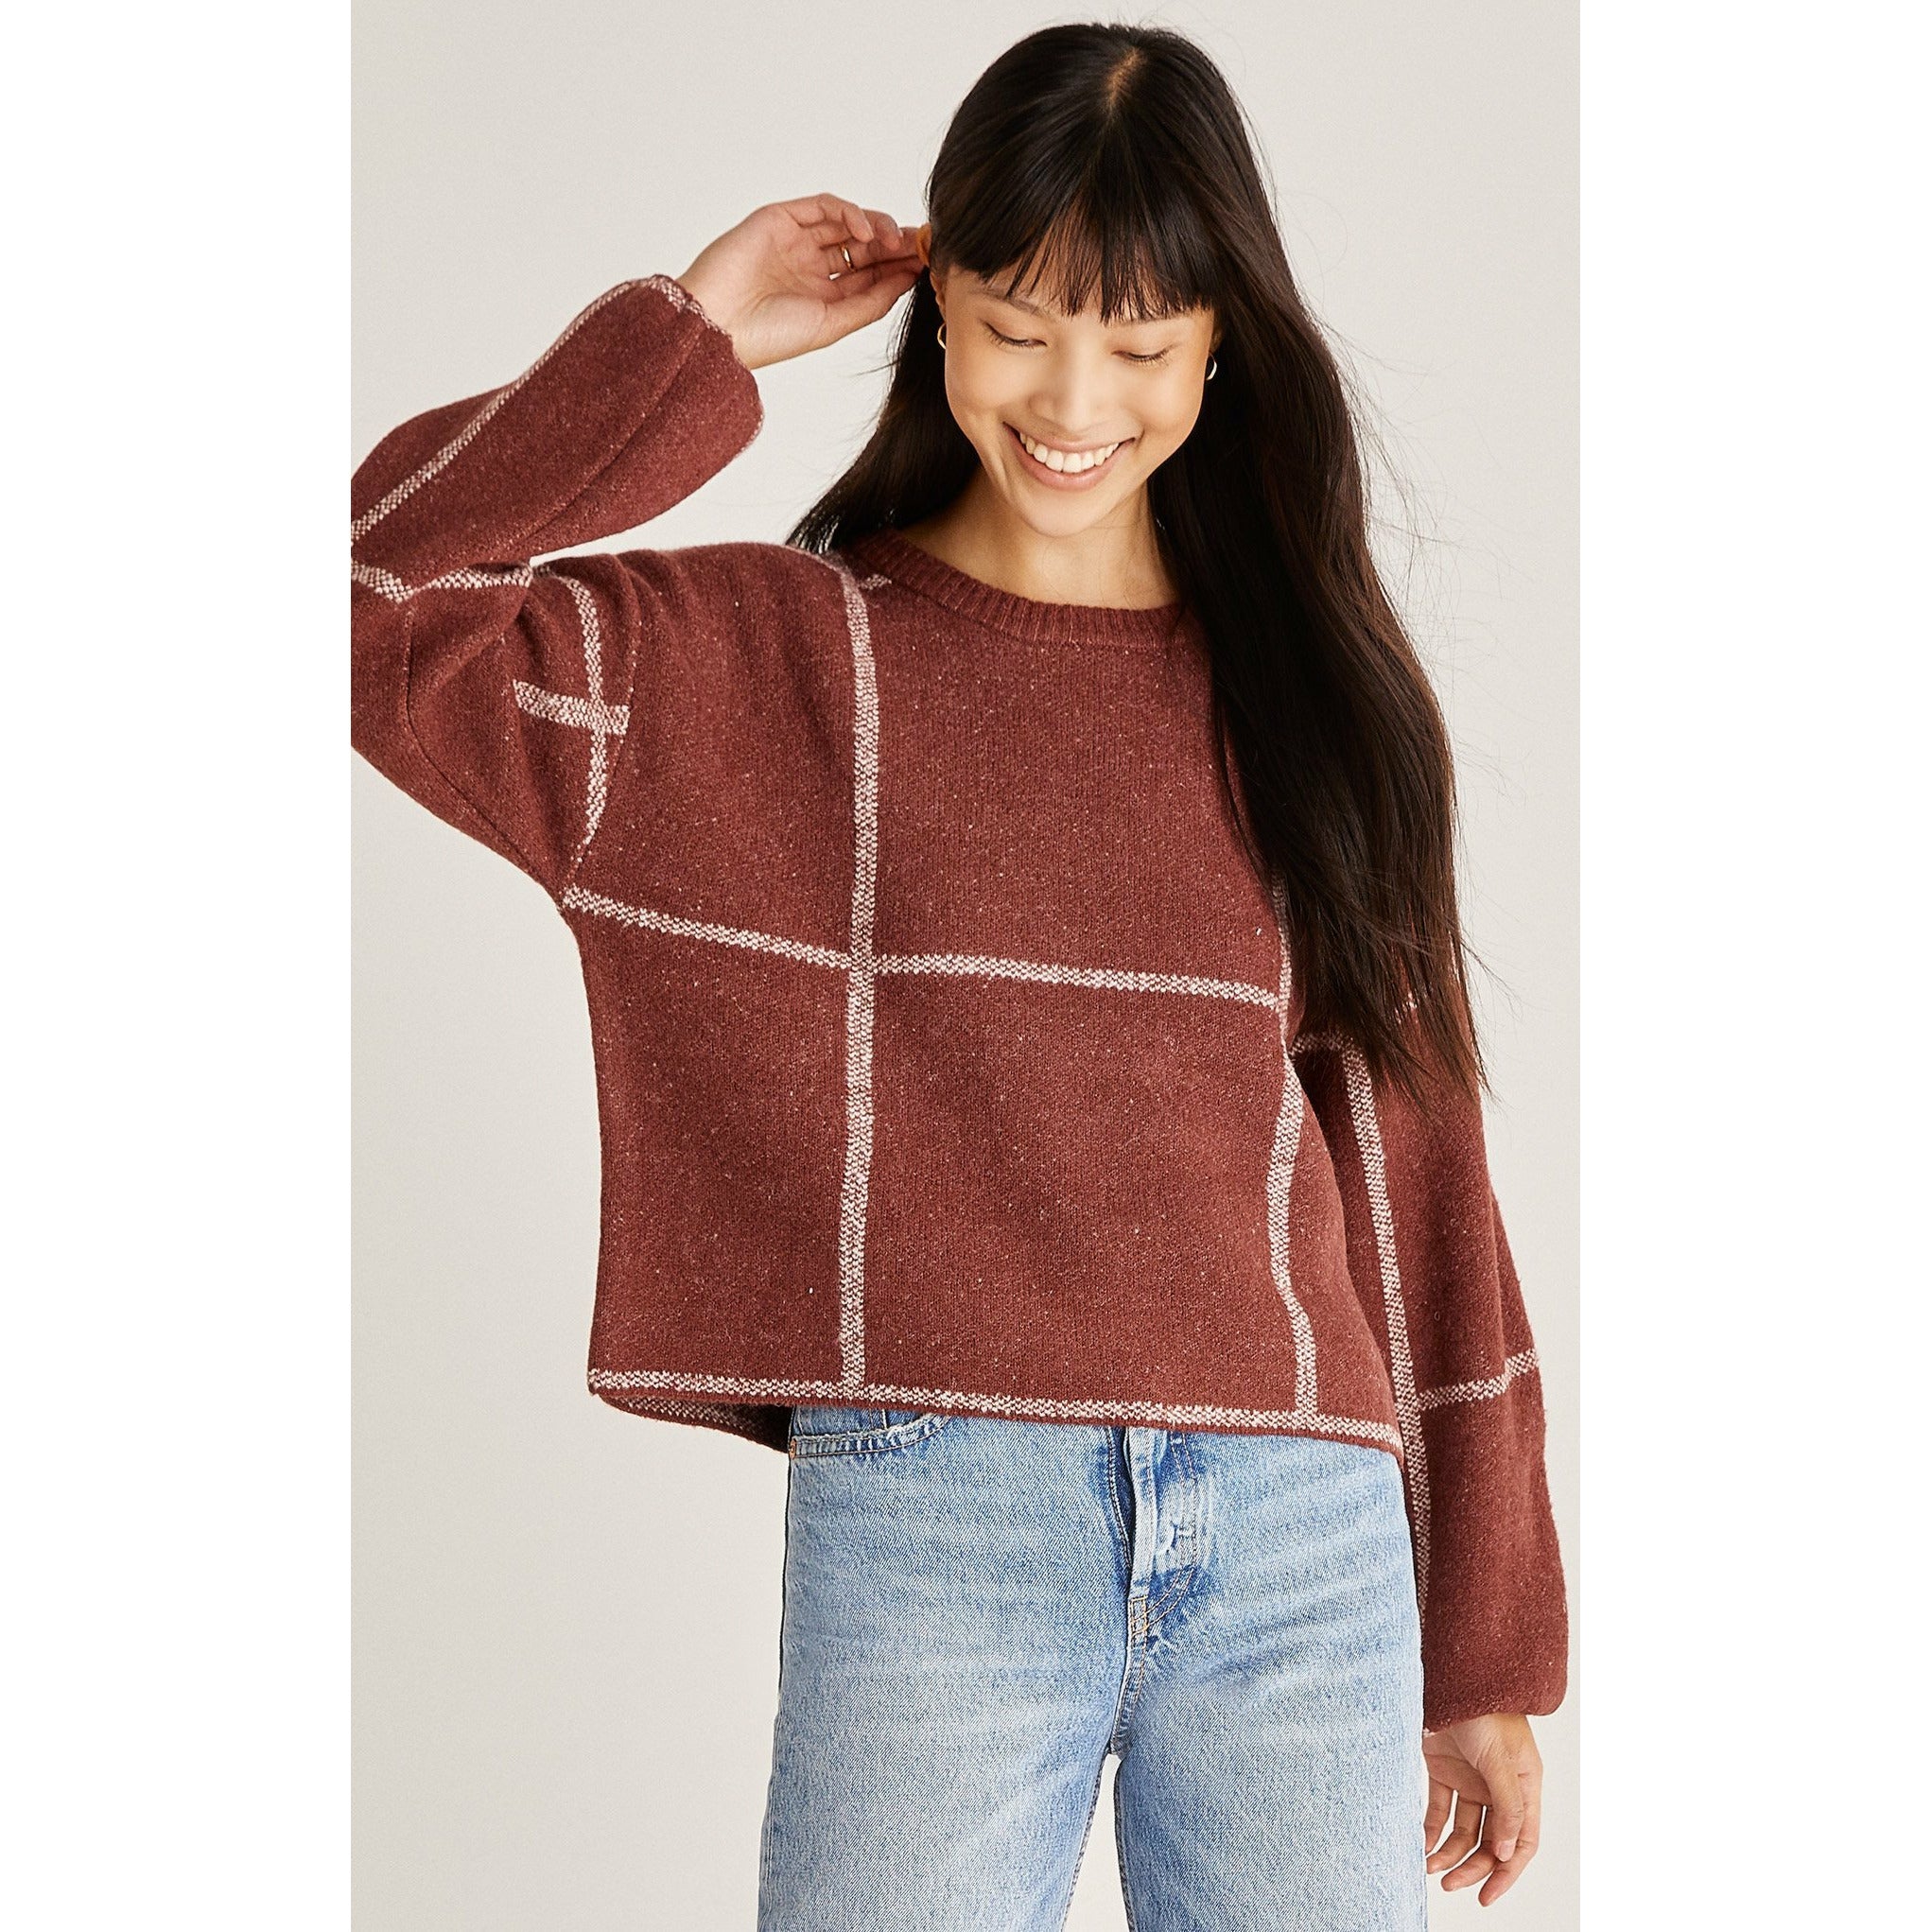 Solange Plaid Sweater